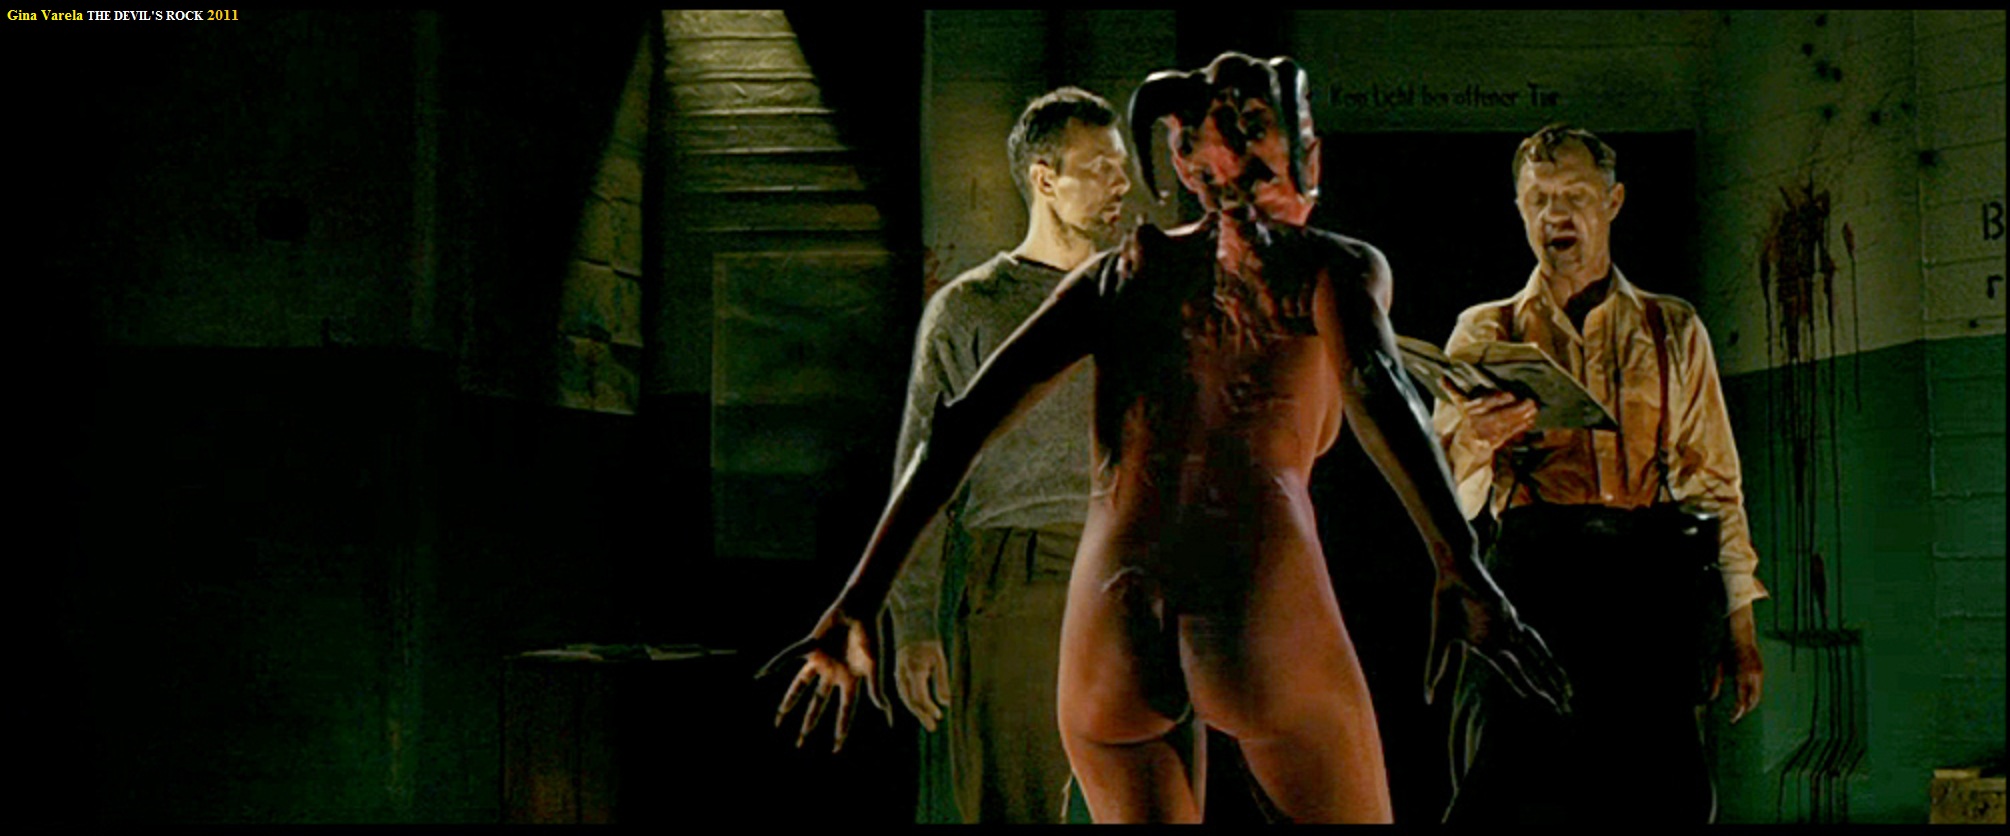 Gina Varela nude pics.